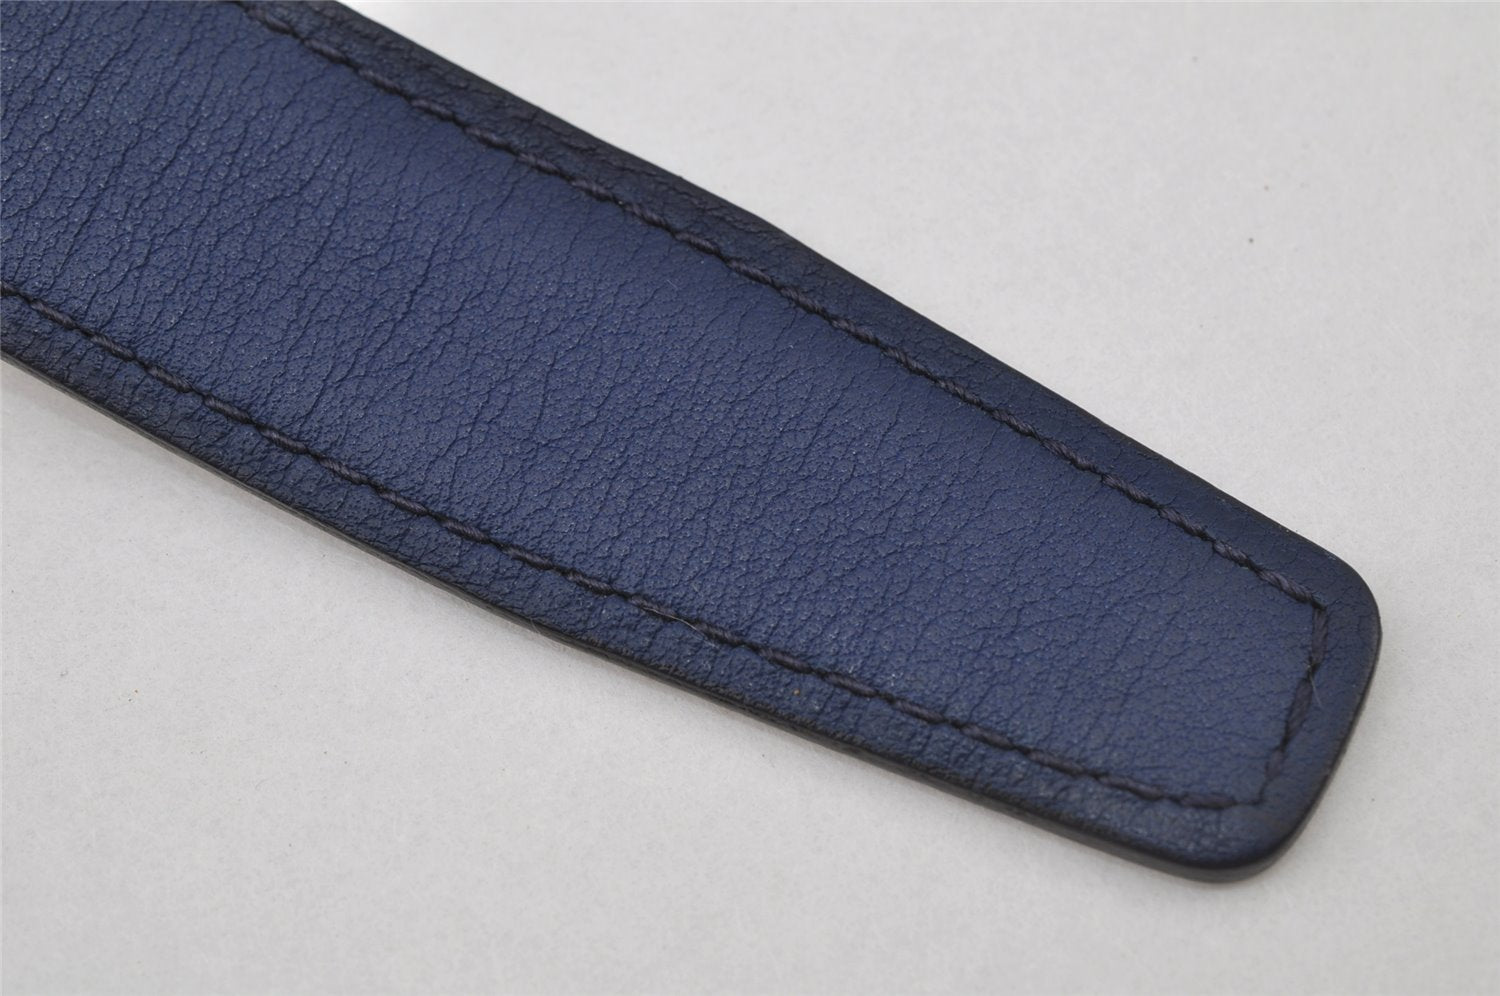 Authentic HERMES Leather Reversible Belt Size 75cm 29.5